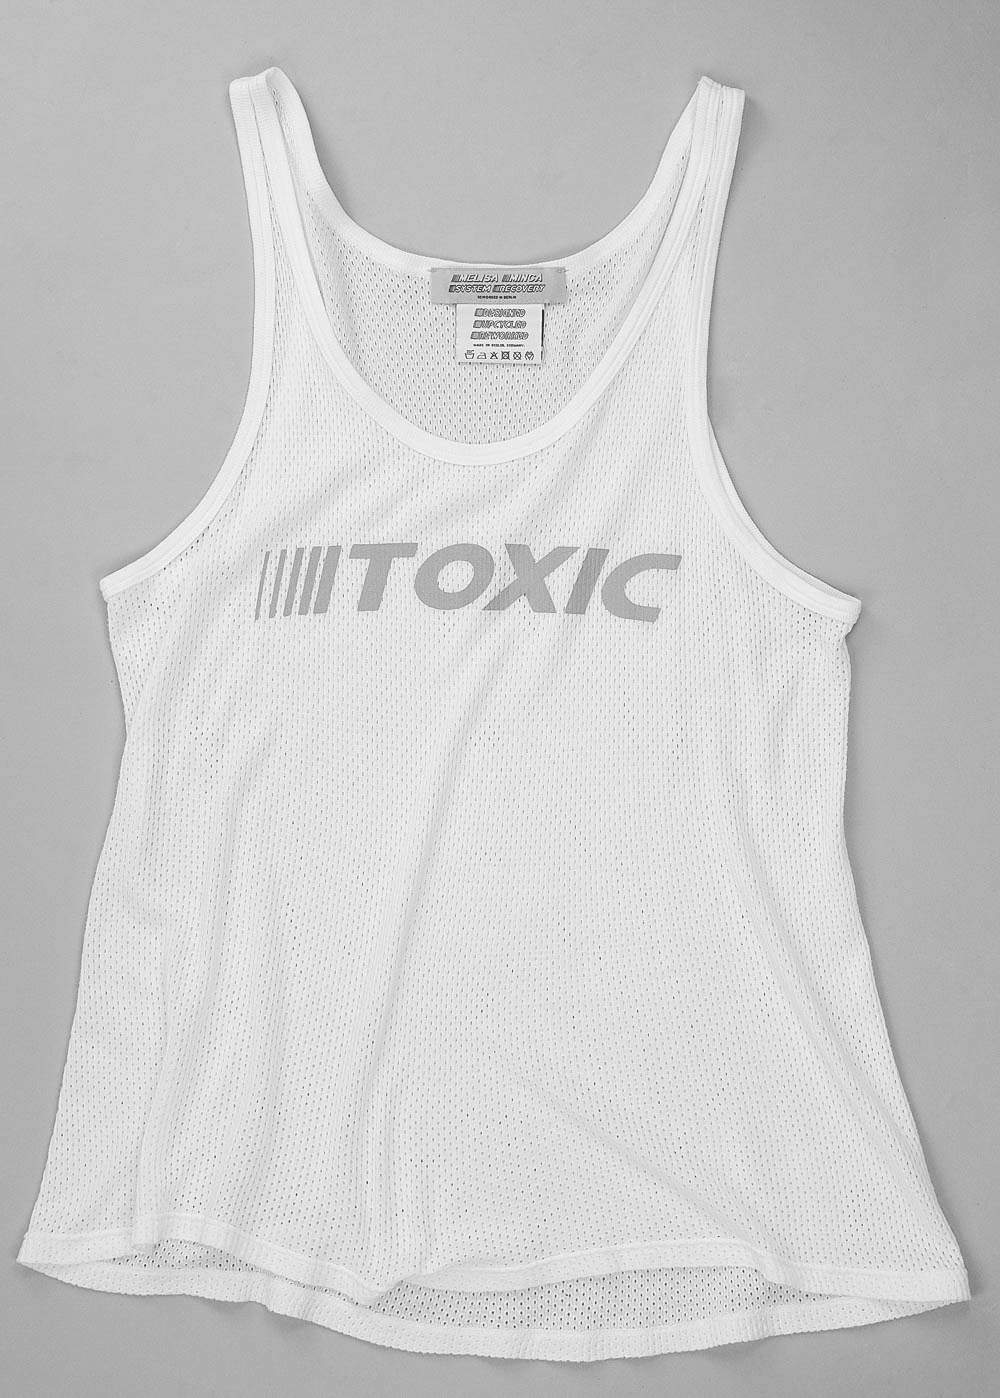 Toxic Tank 10